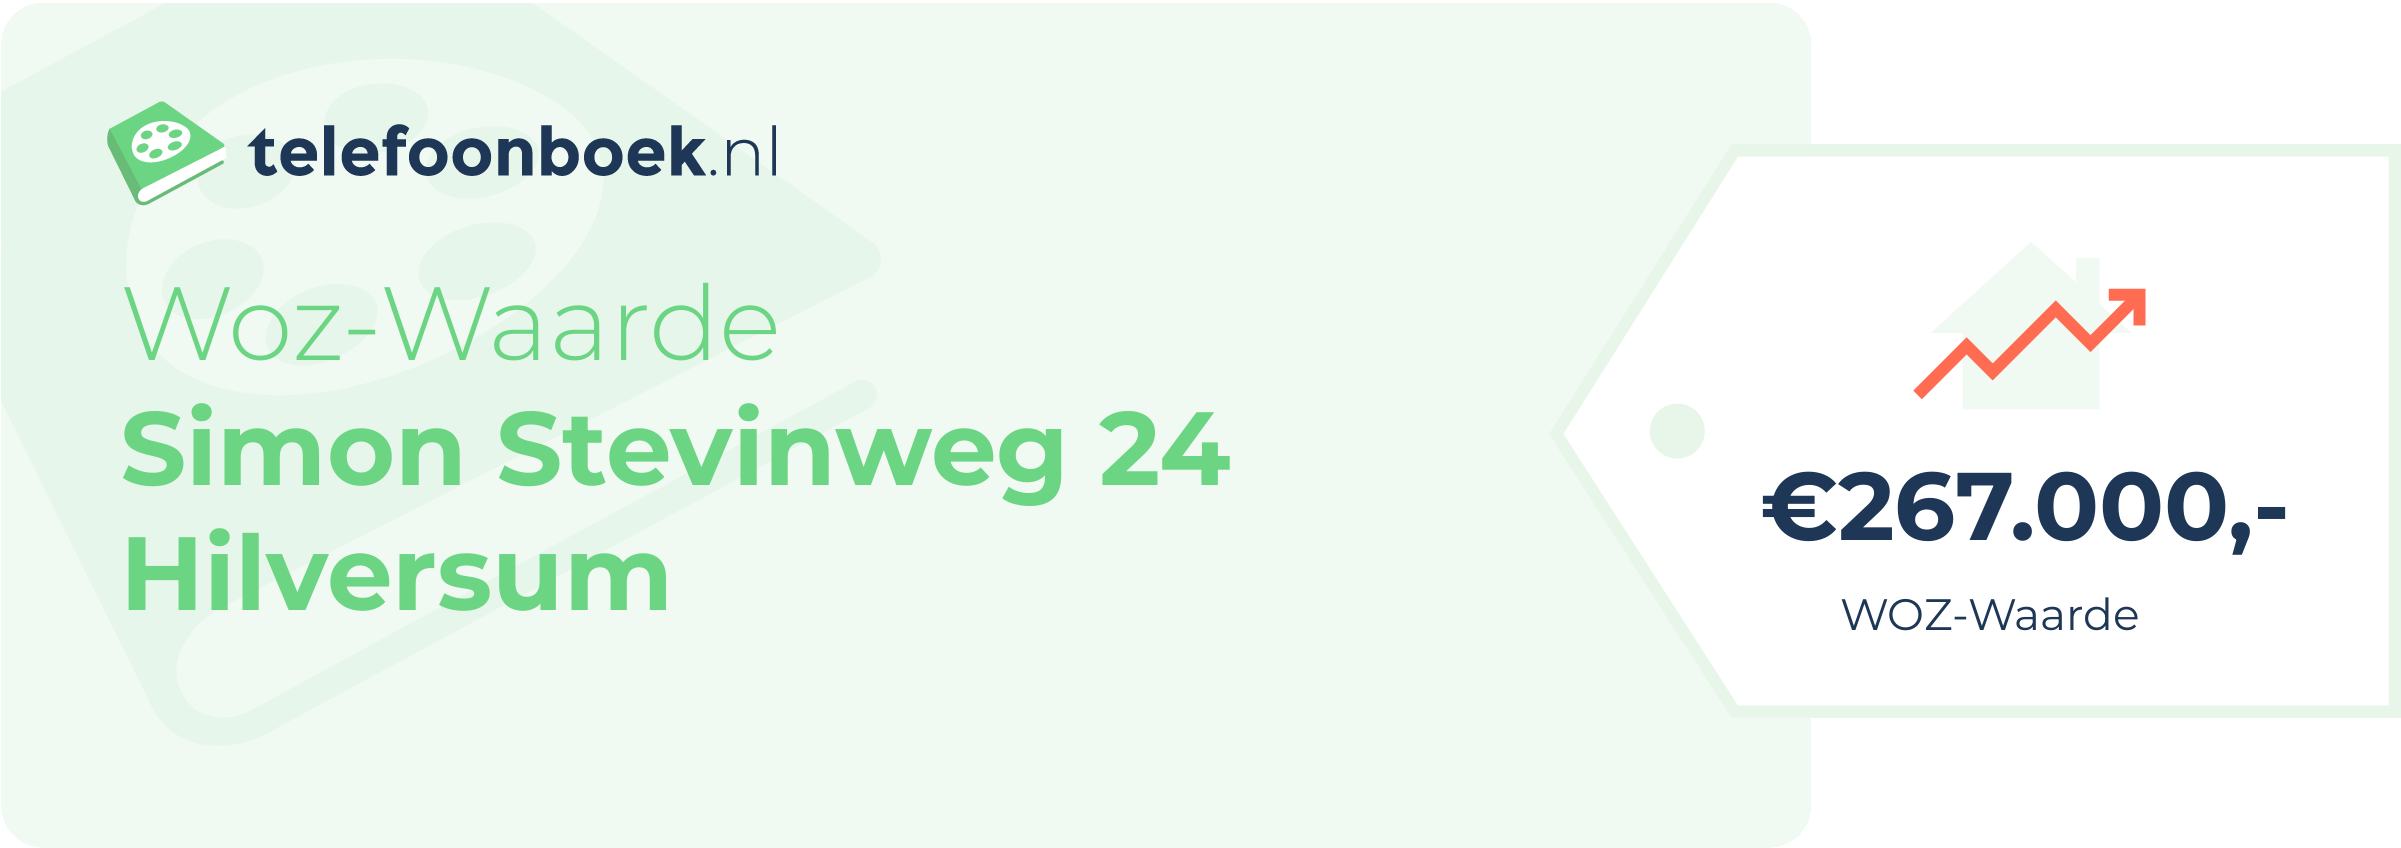 WOZ-waarde Simon Stevinweg 24 Hilversum